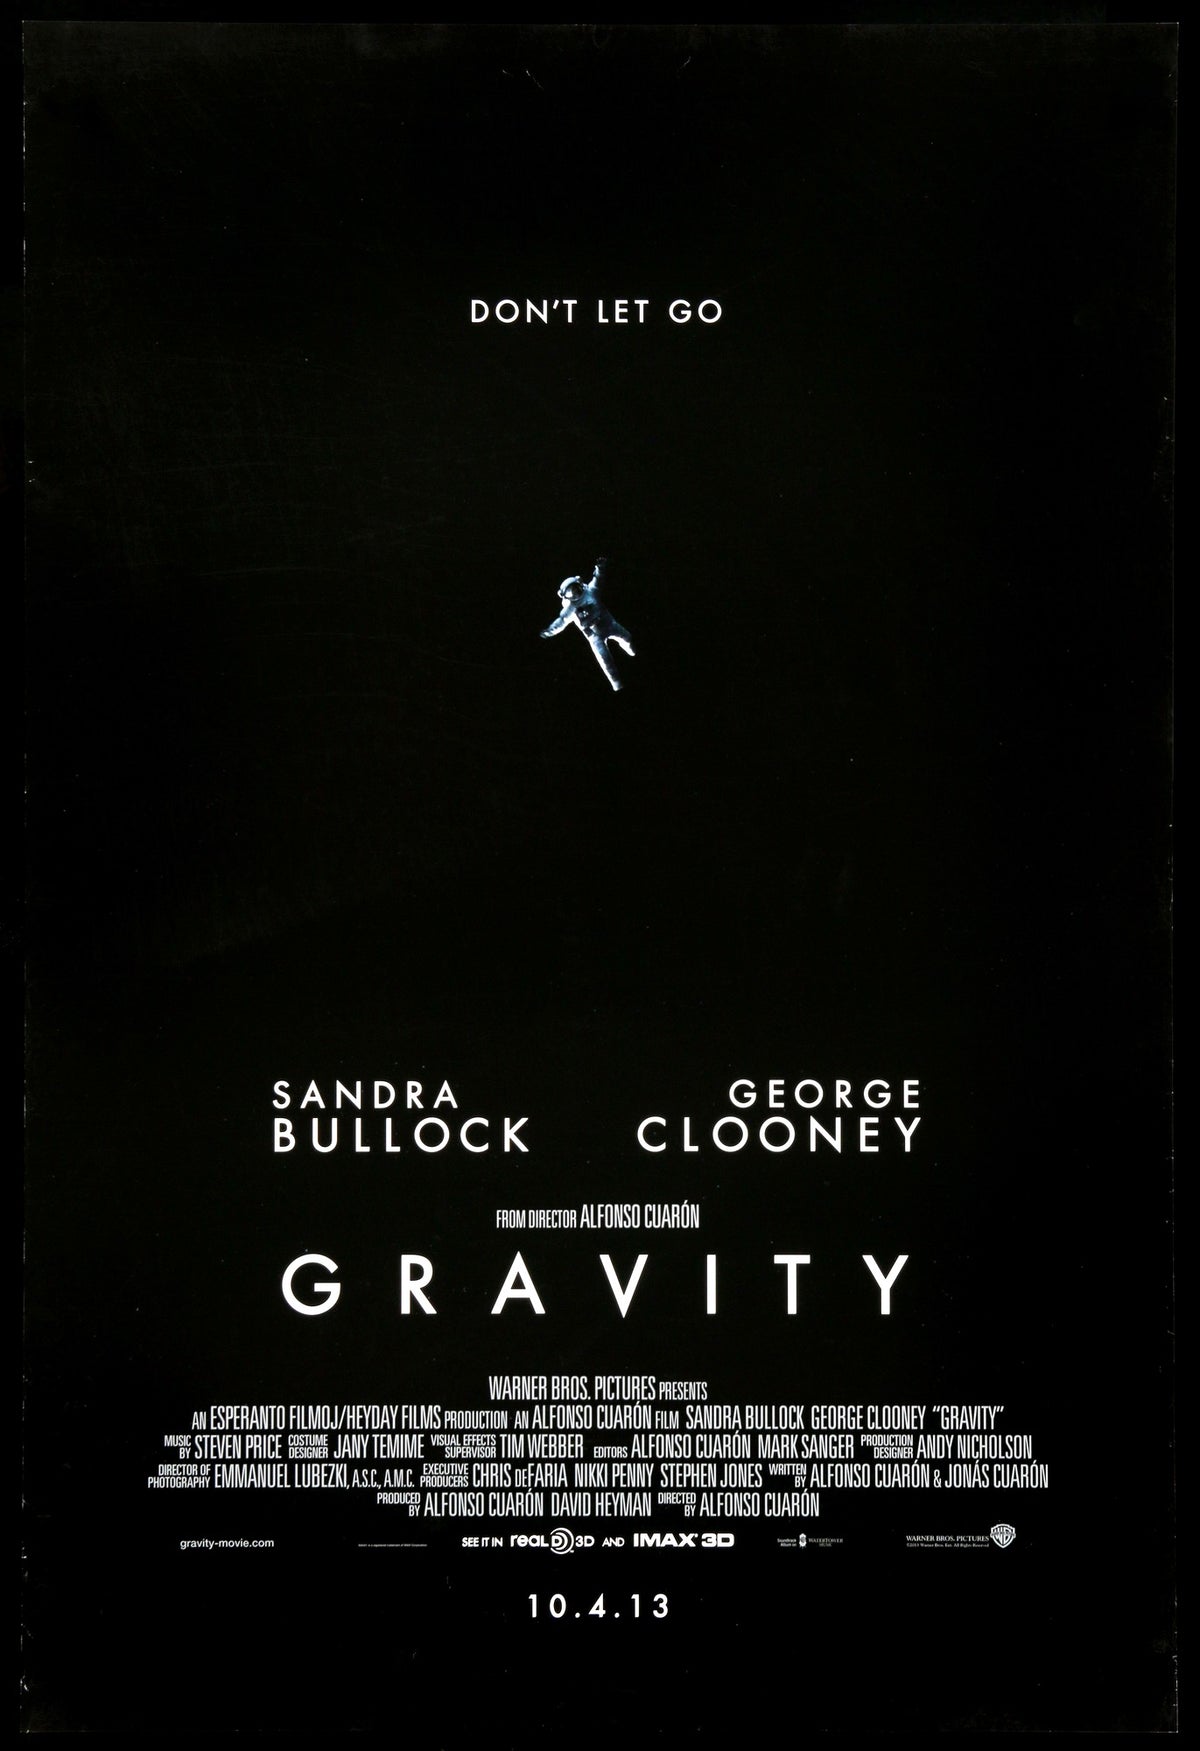 Gravity (2013) original movie poster for sale at Original Film Art